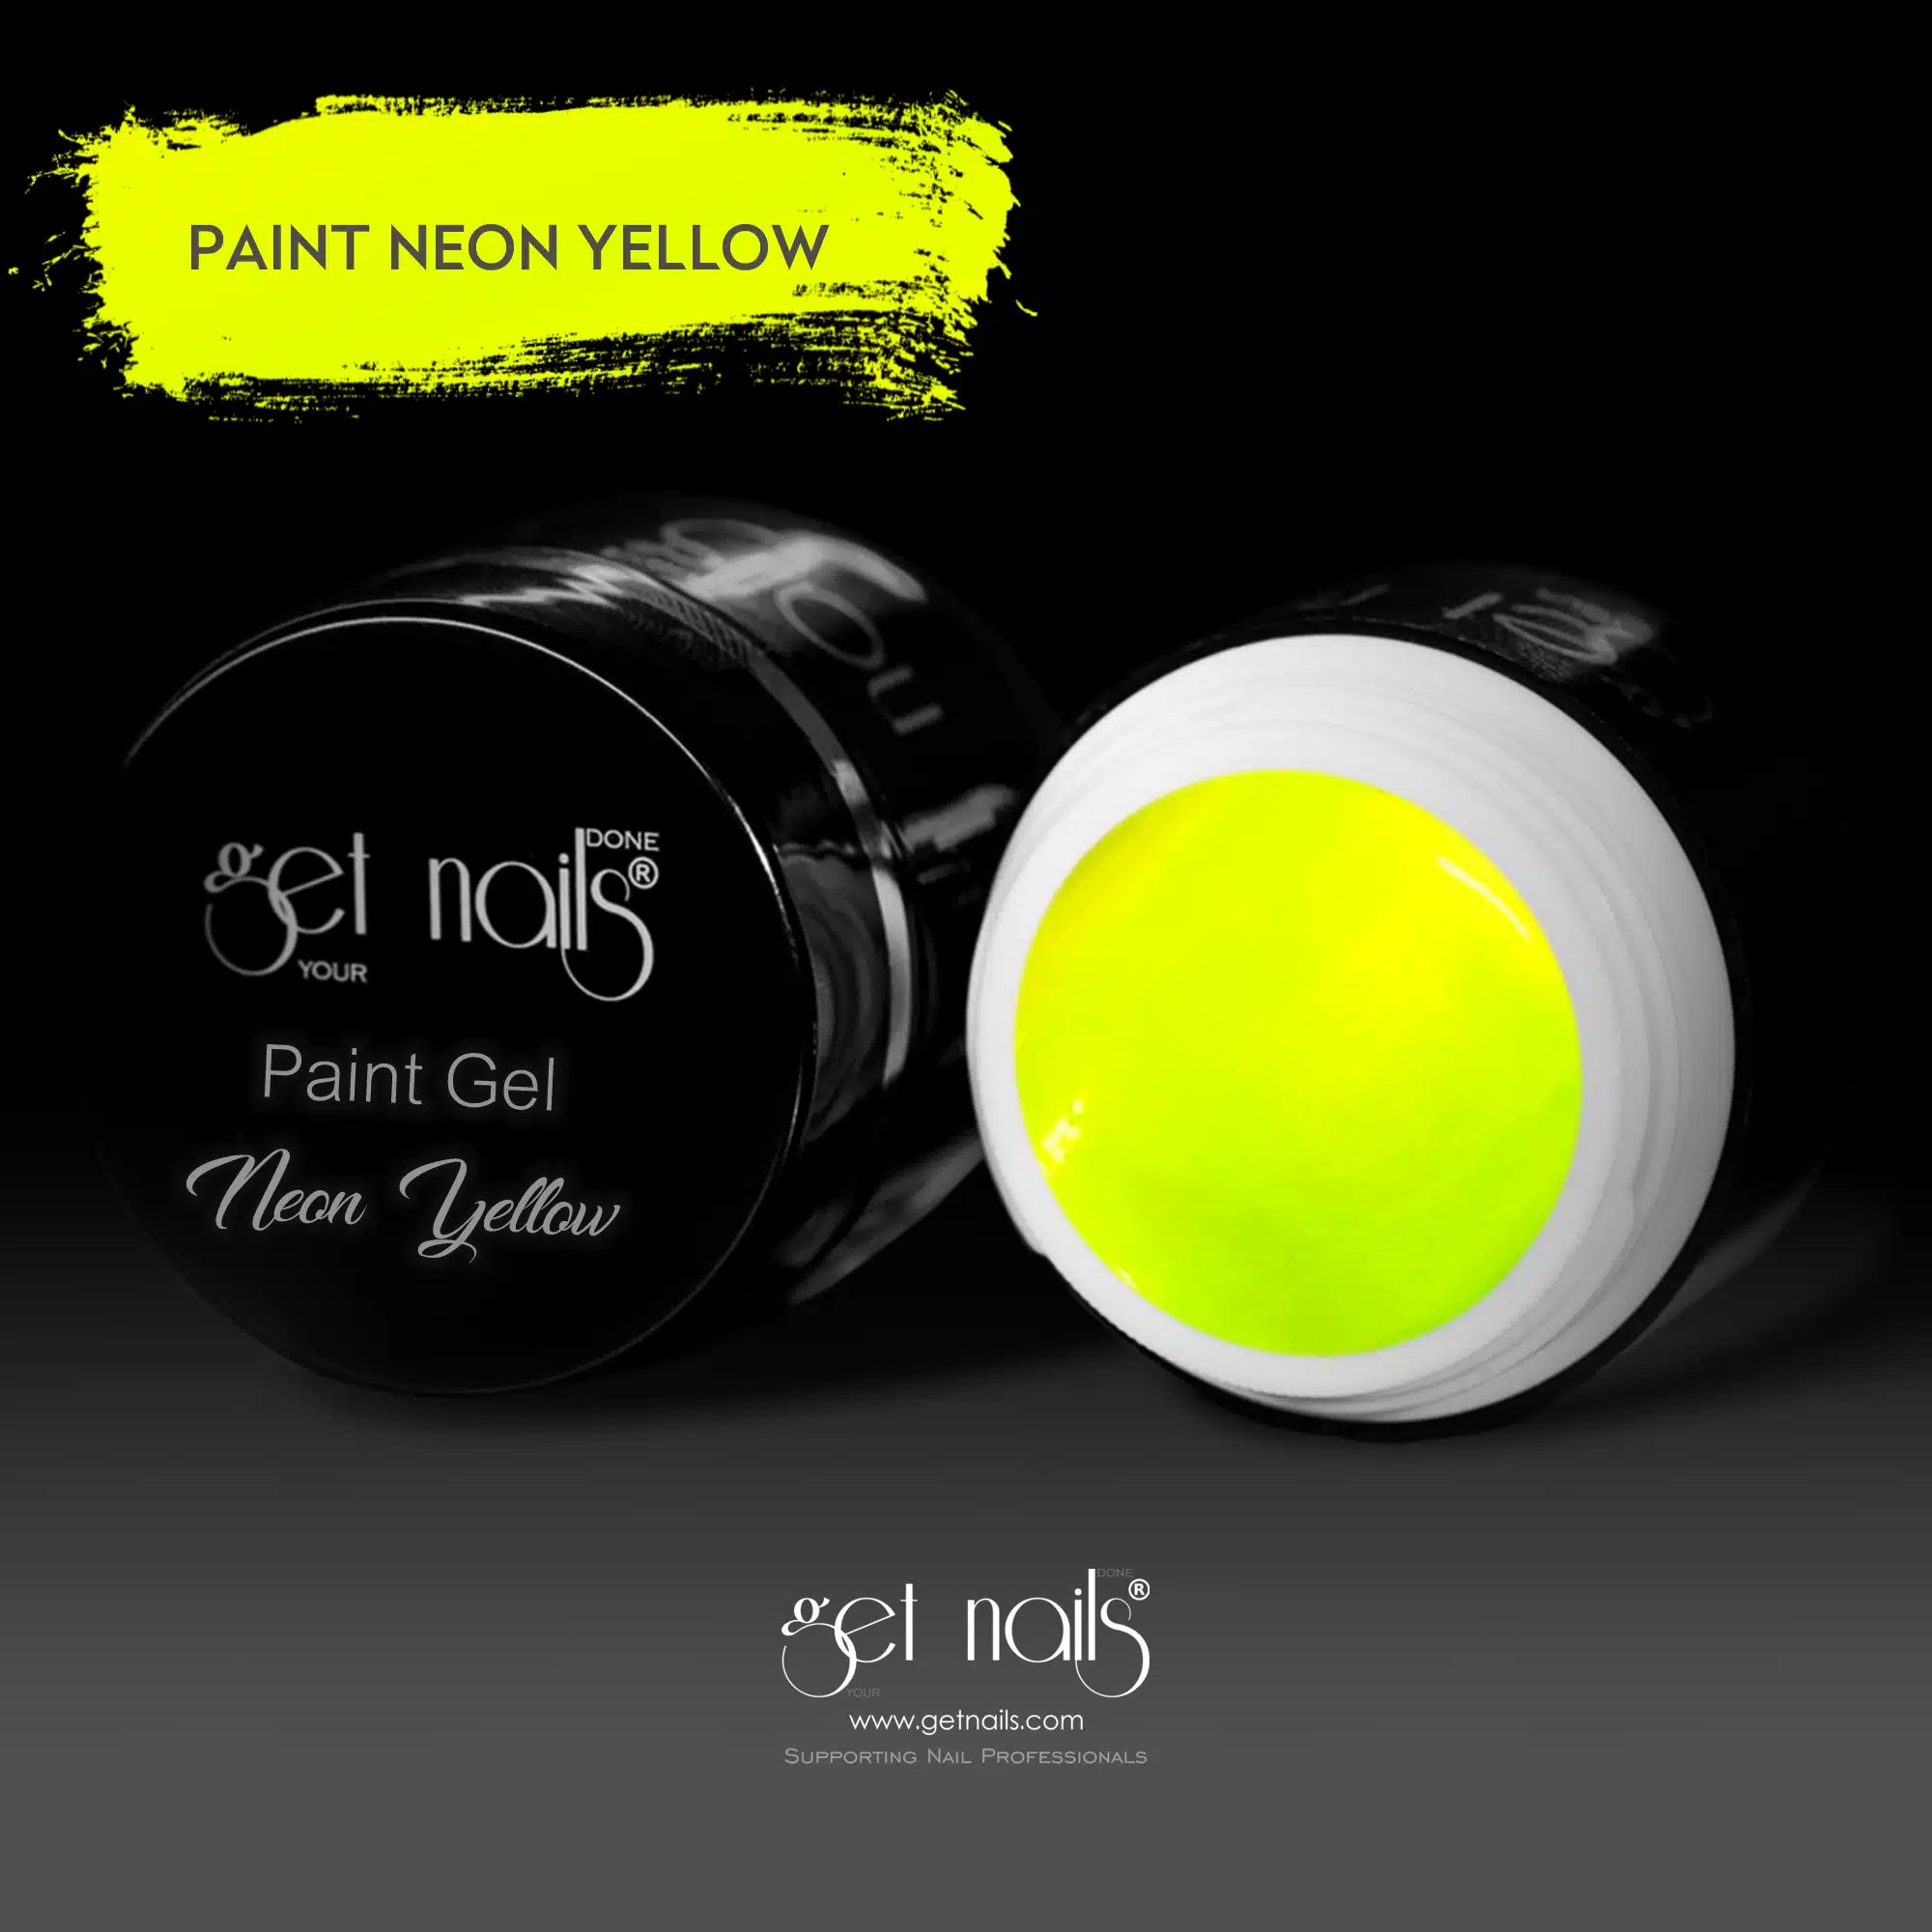 Get Nails Austria - Gel per pittura Neon Yellow 5g